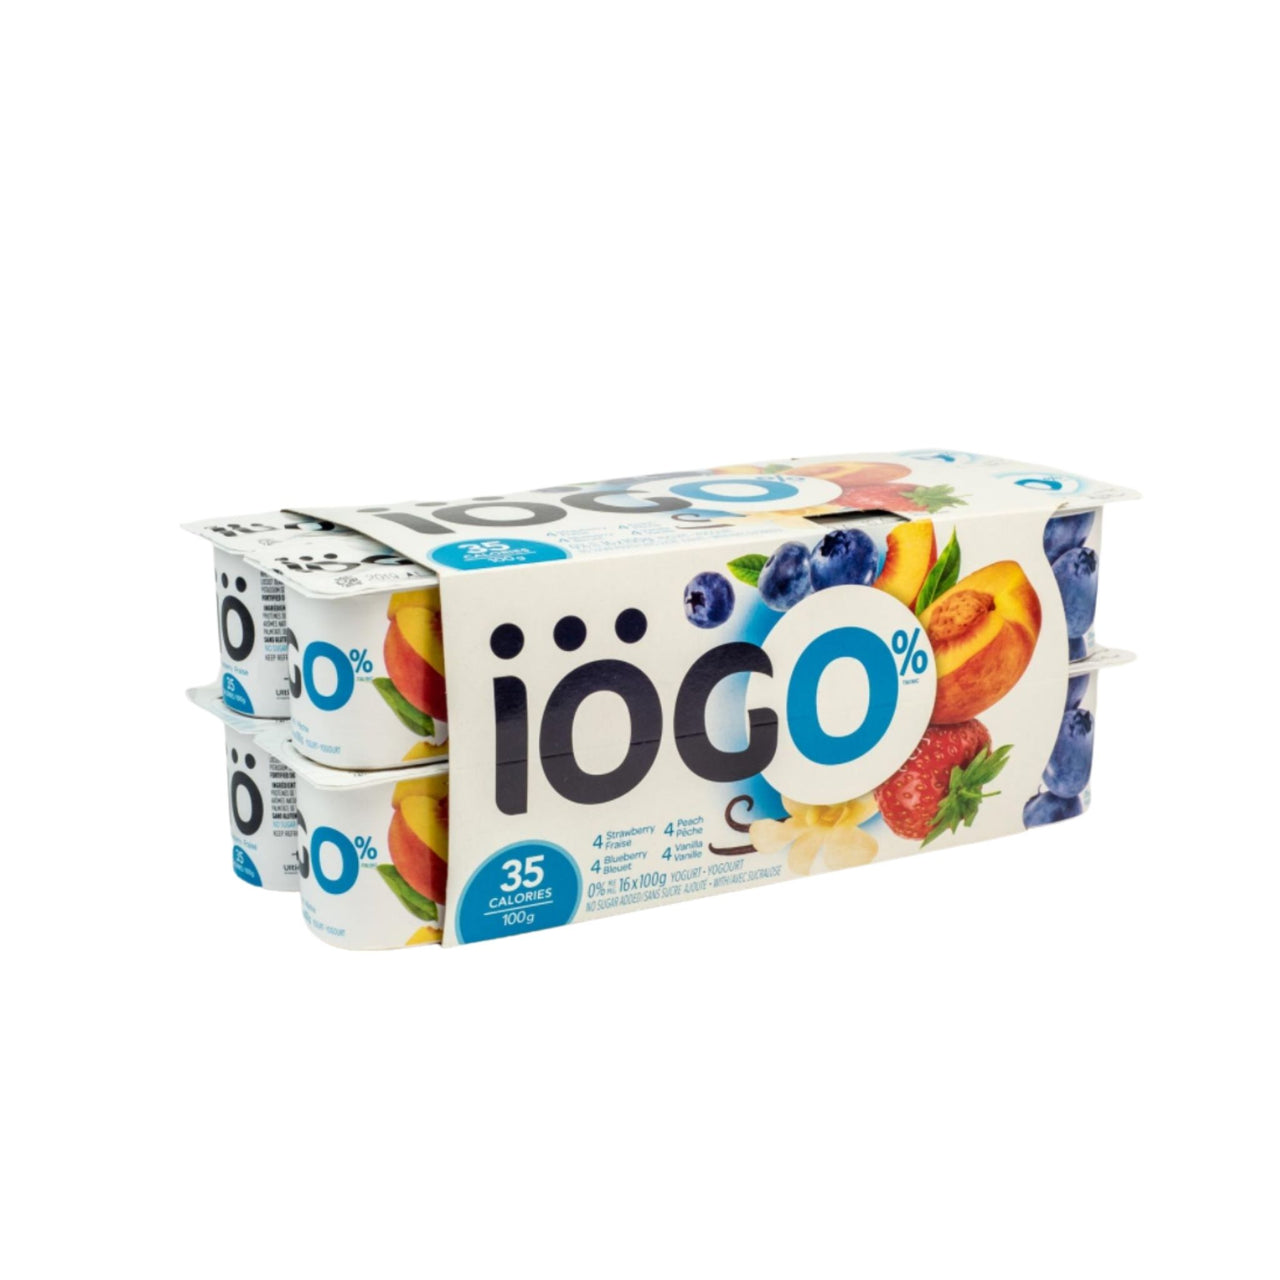 Image of IOGO 0% Yogurt 24-pack - 1 x 2.4 Kilos